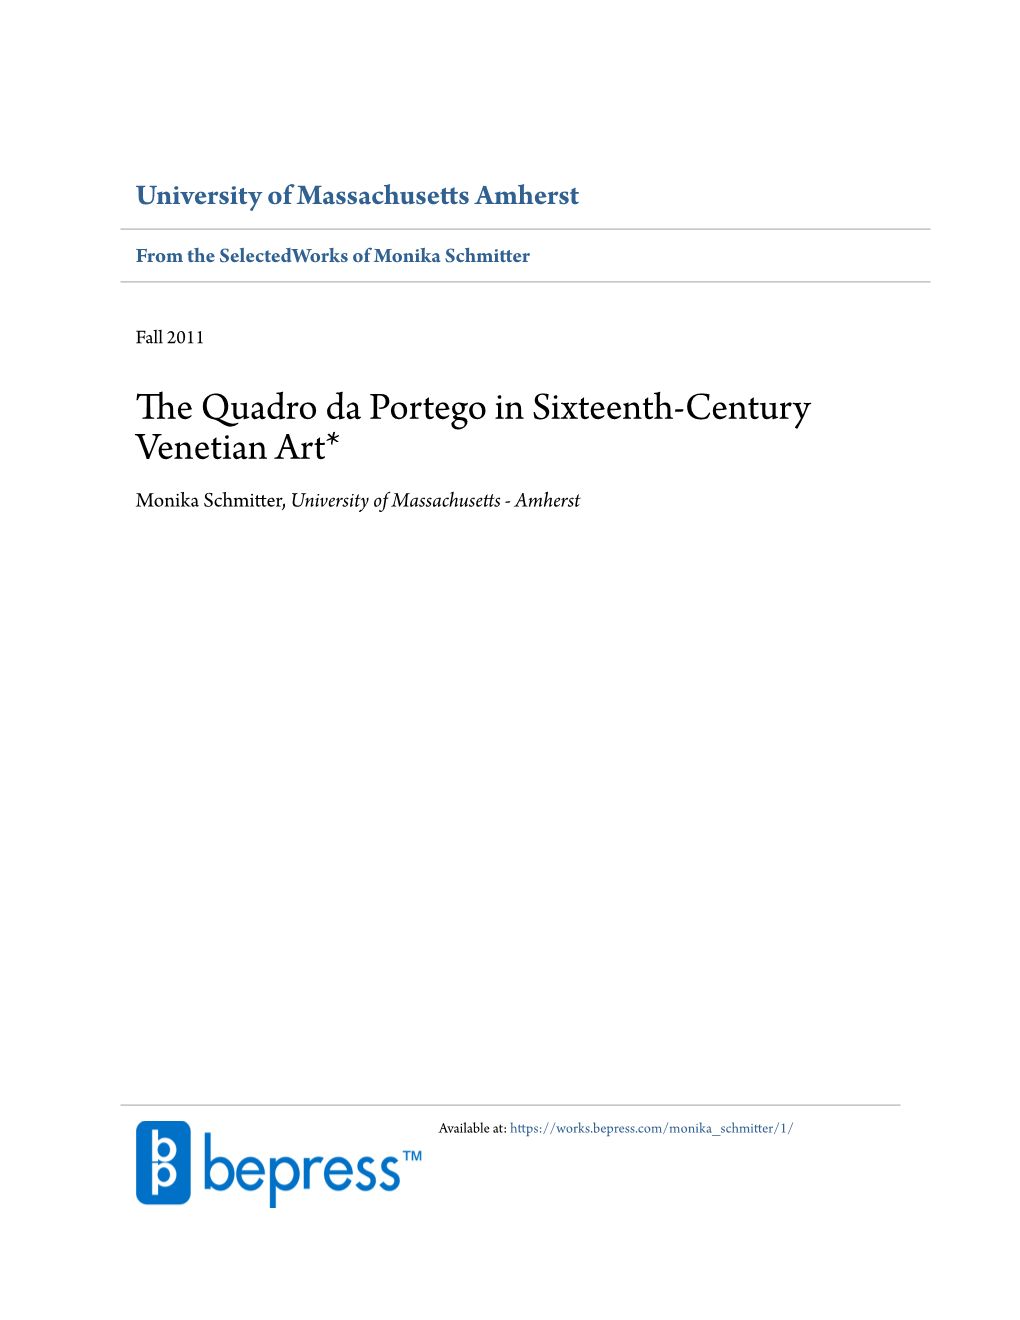 The Quadro Da Portego in Sixteenth-Century Venetian Art* Monika Schmitter, University of Massachusetts - Amherst